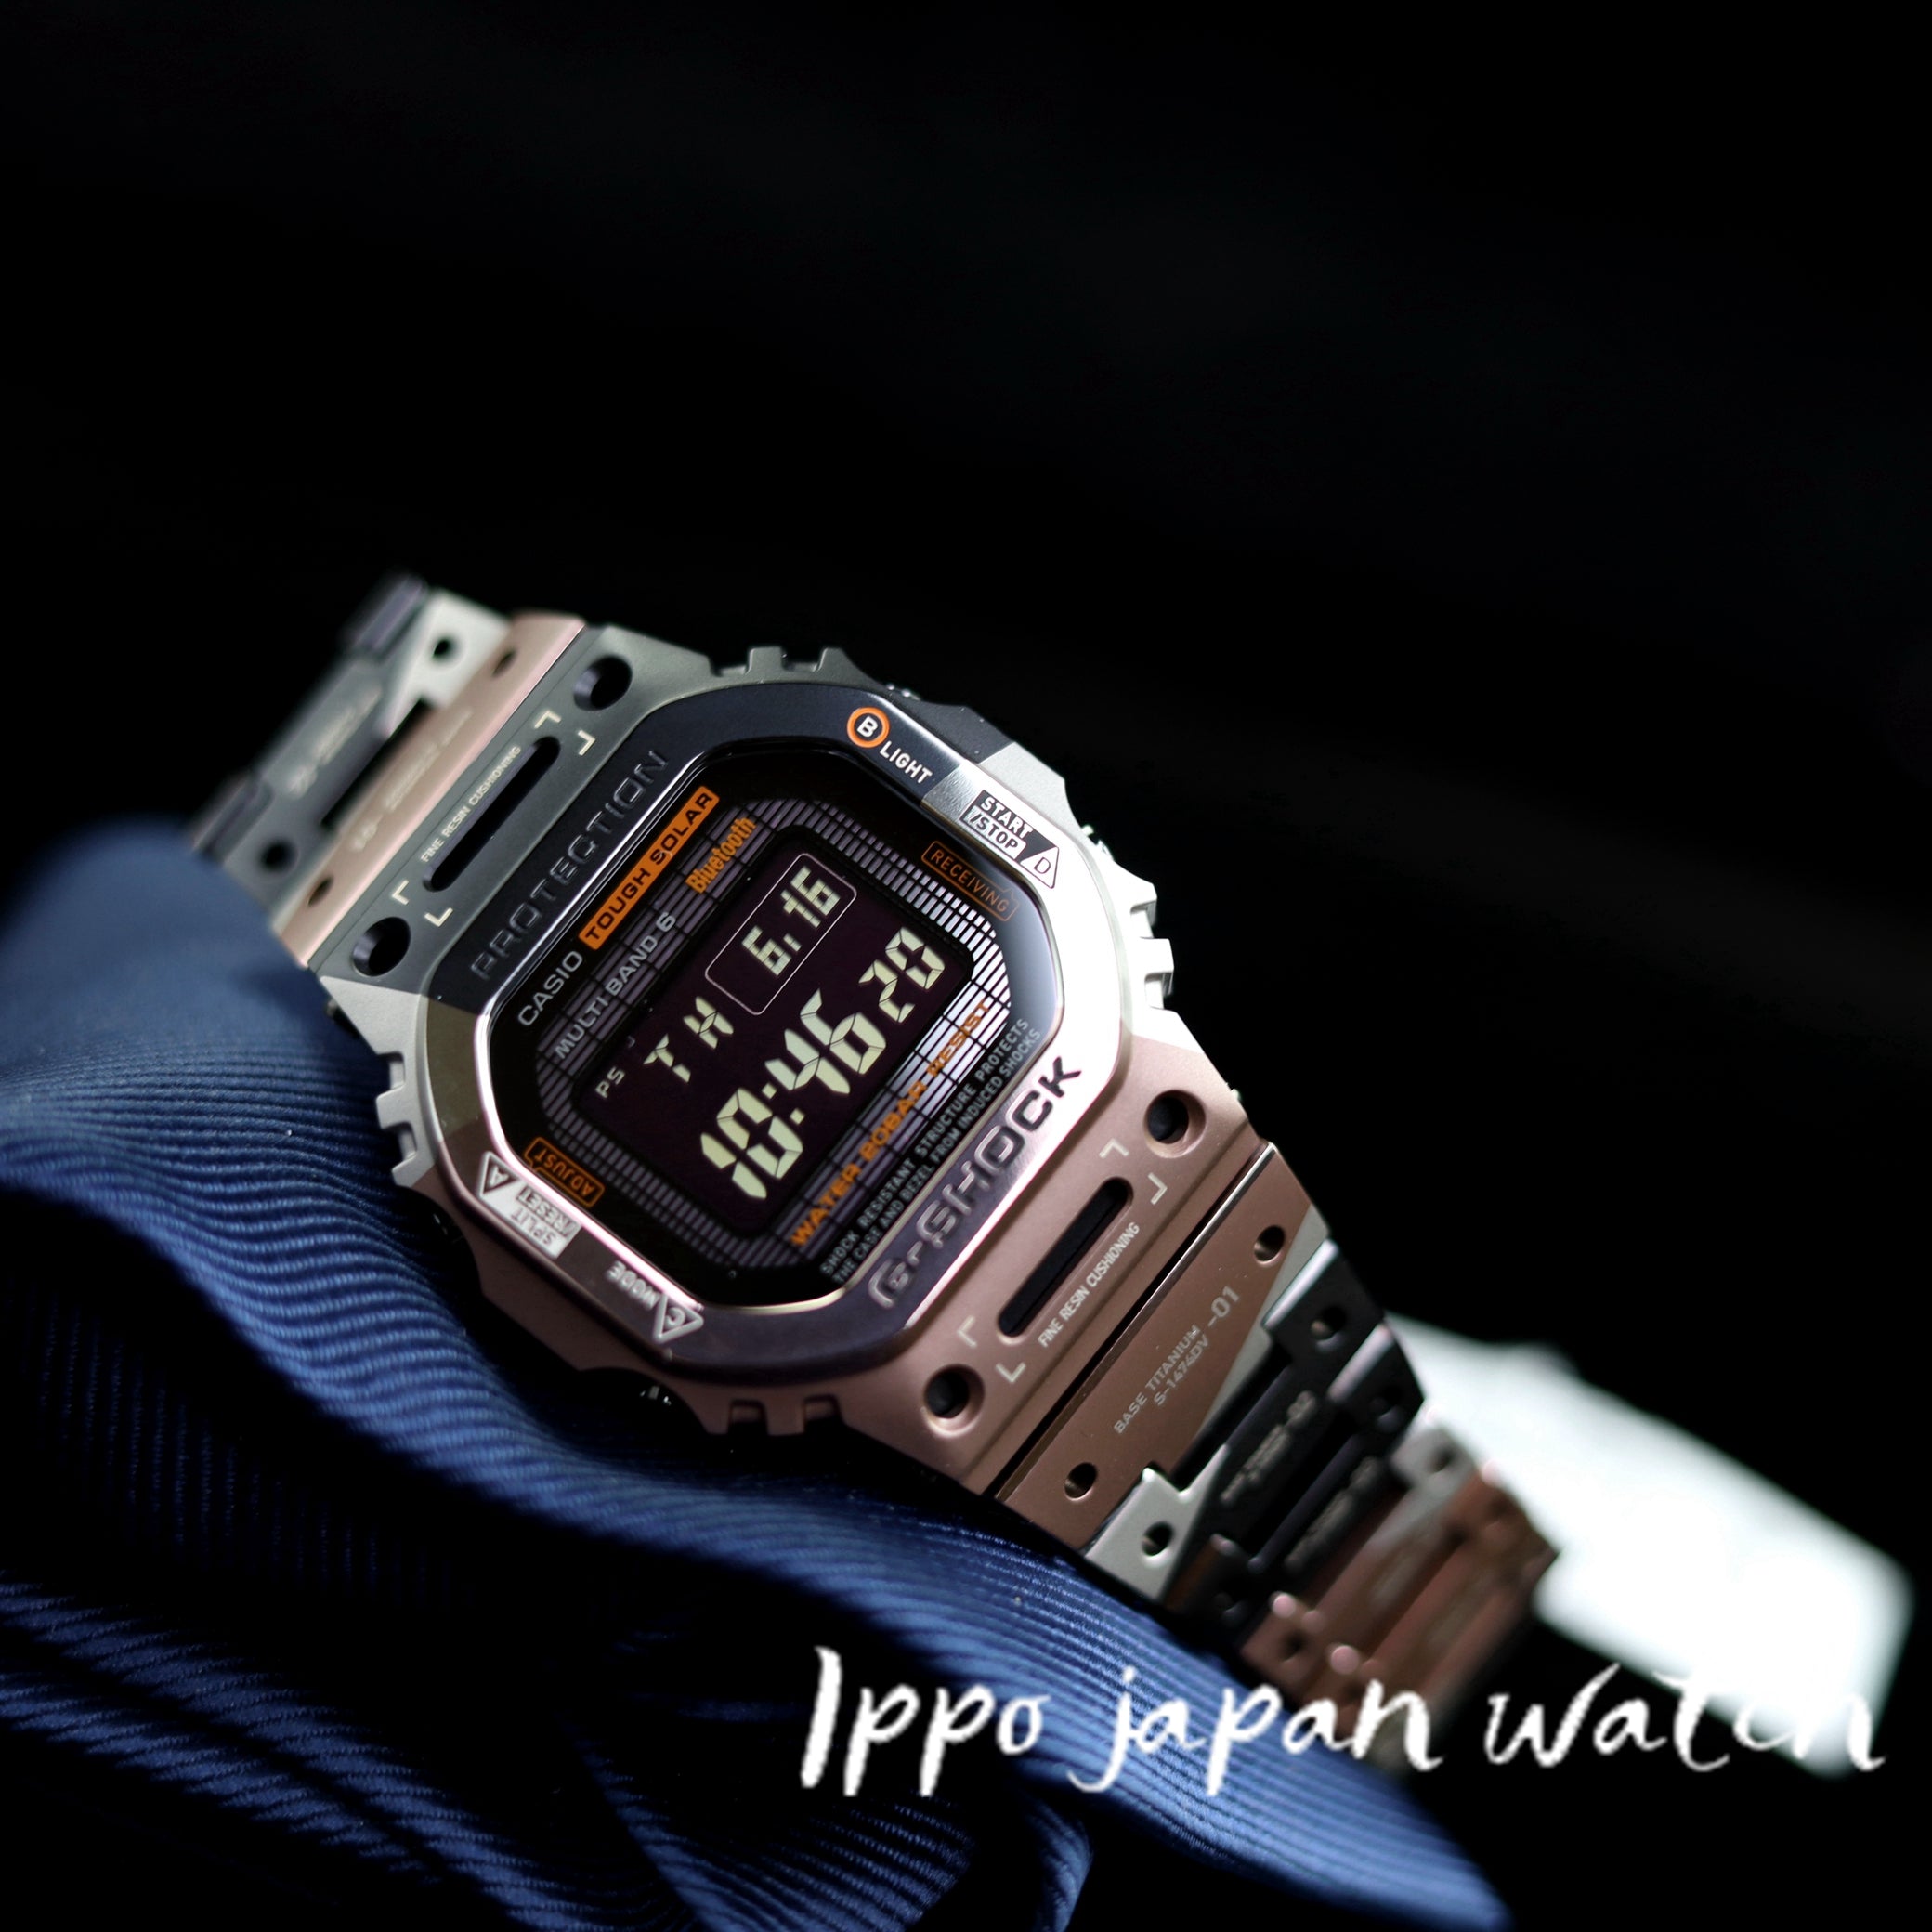 CASIO G-SHOCK GMW-B5000TVB-1JR GMW-B5000TVB-1 Solar 20 bar watch - IPPO JAPAN WATCH 